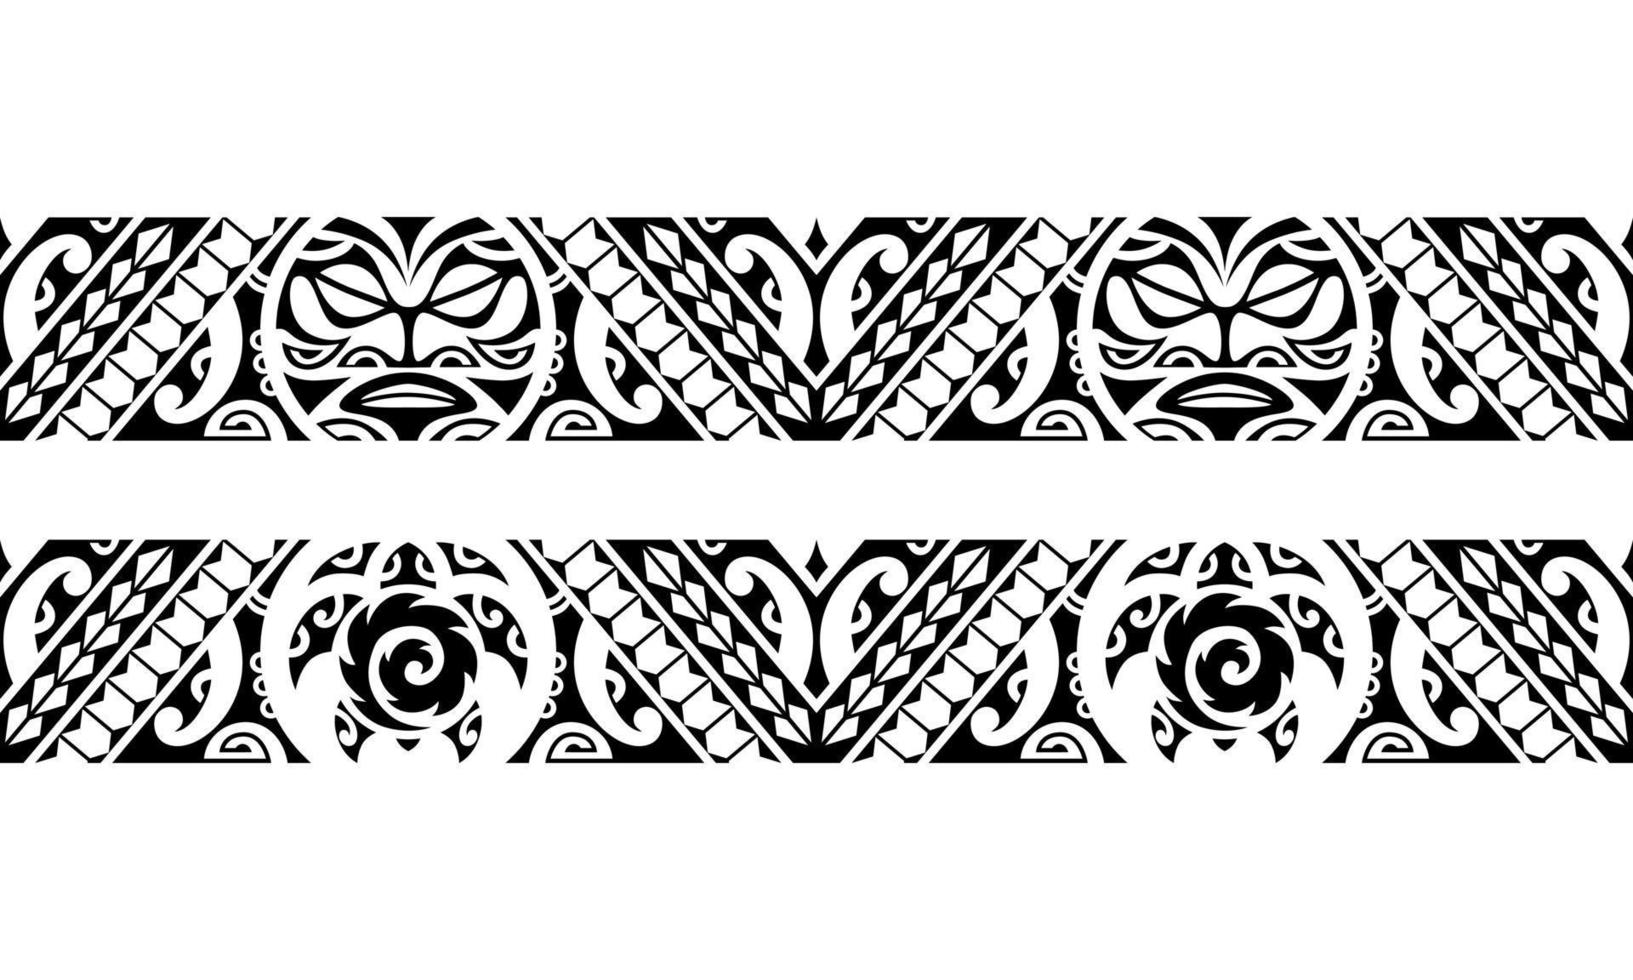 conjunto de brazaletes de tatuaje polinesio maorí frontera. vector de patrones sin fisuras de manga tribal.